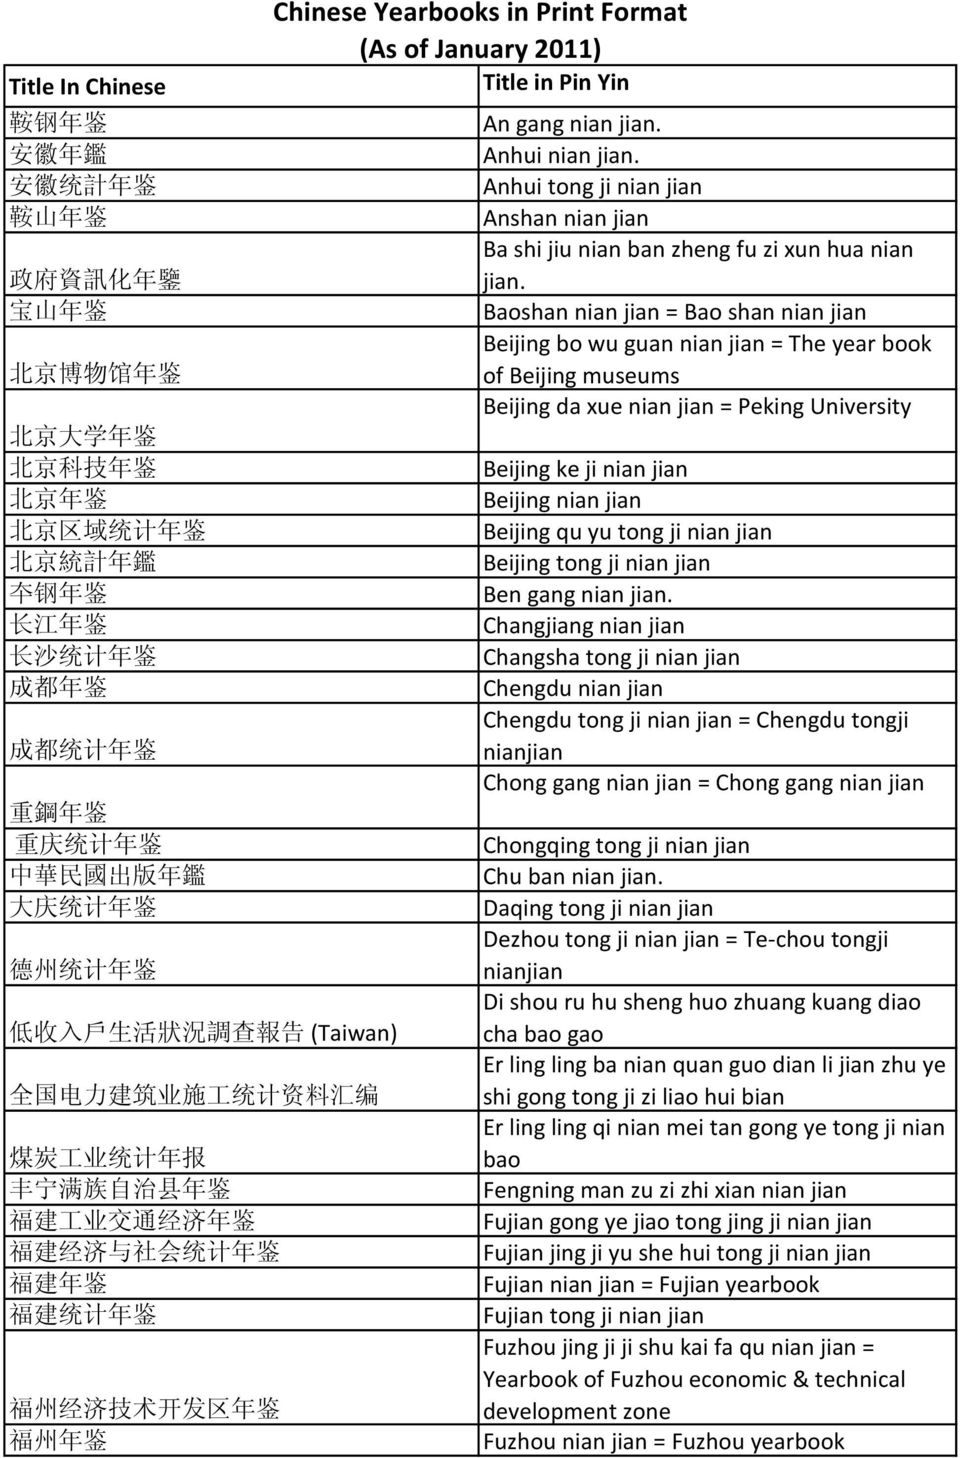 建 年 鉴 福 建 统 计 年 鉴 福 州 经 济 技 术 开 发 区 年 鉴 福 州 年 鉴 Chinese Yearbooks in Print Format (As of January 2011) Title in Pin Yin An gang nian. Anhui nian.